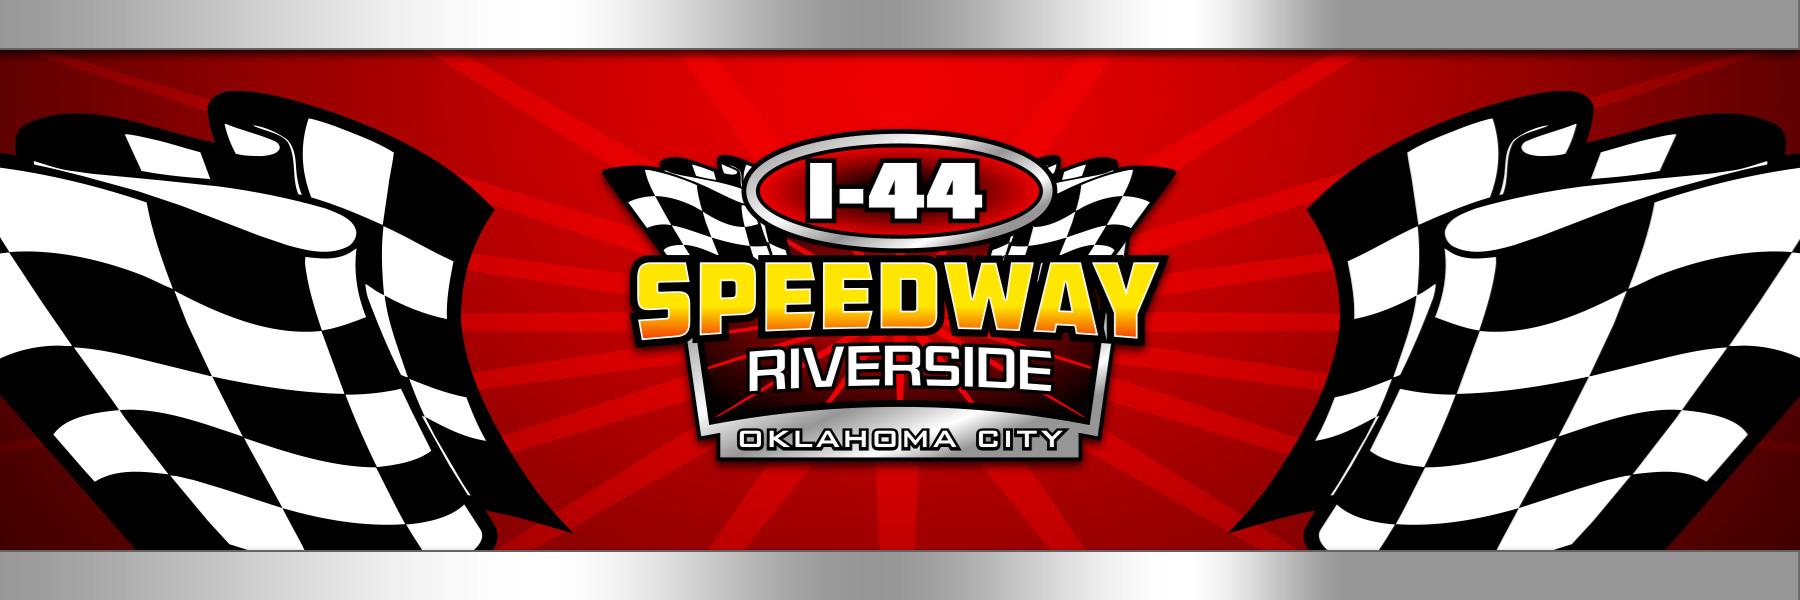 9/11/2021 - I-44 Riverside Speedway